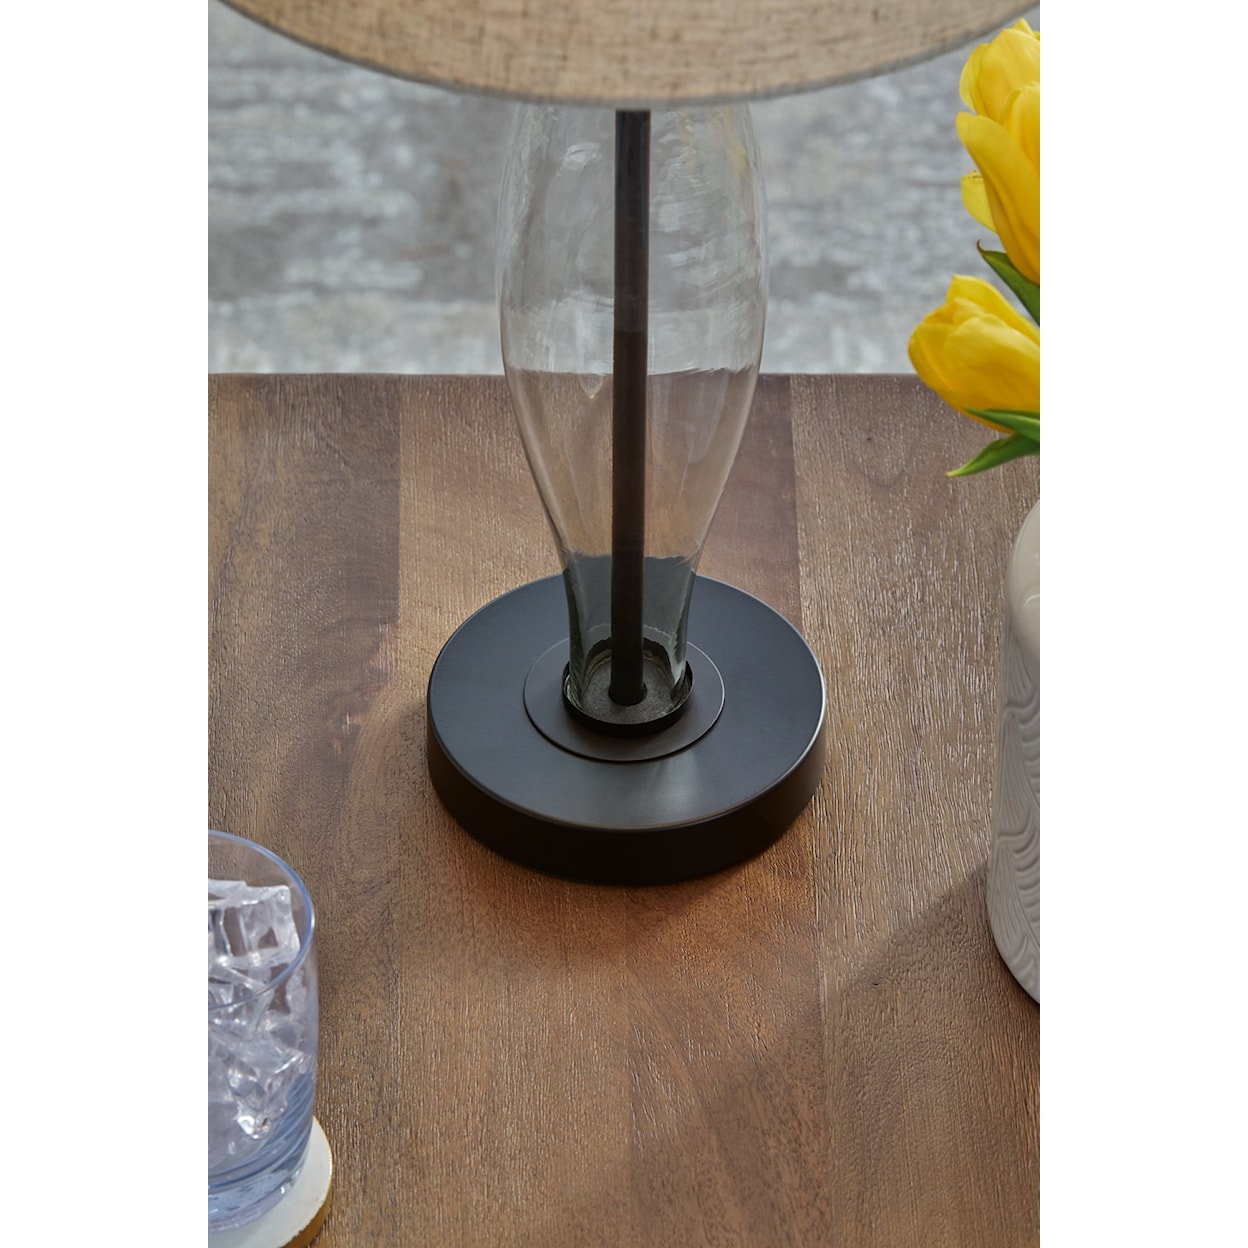 Signature Design Travisburg Glass Table Lamp (Set of 2)